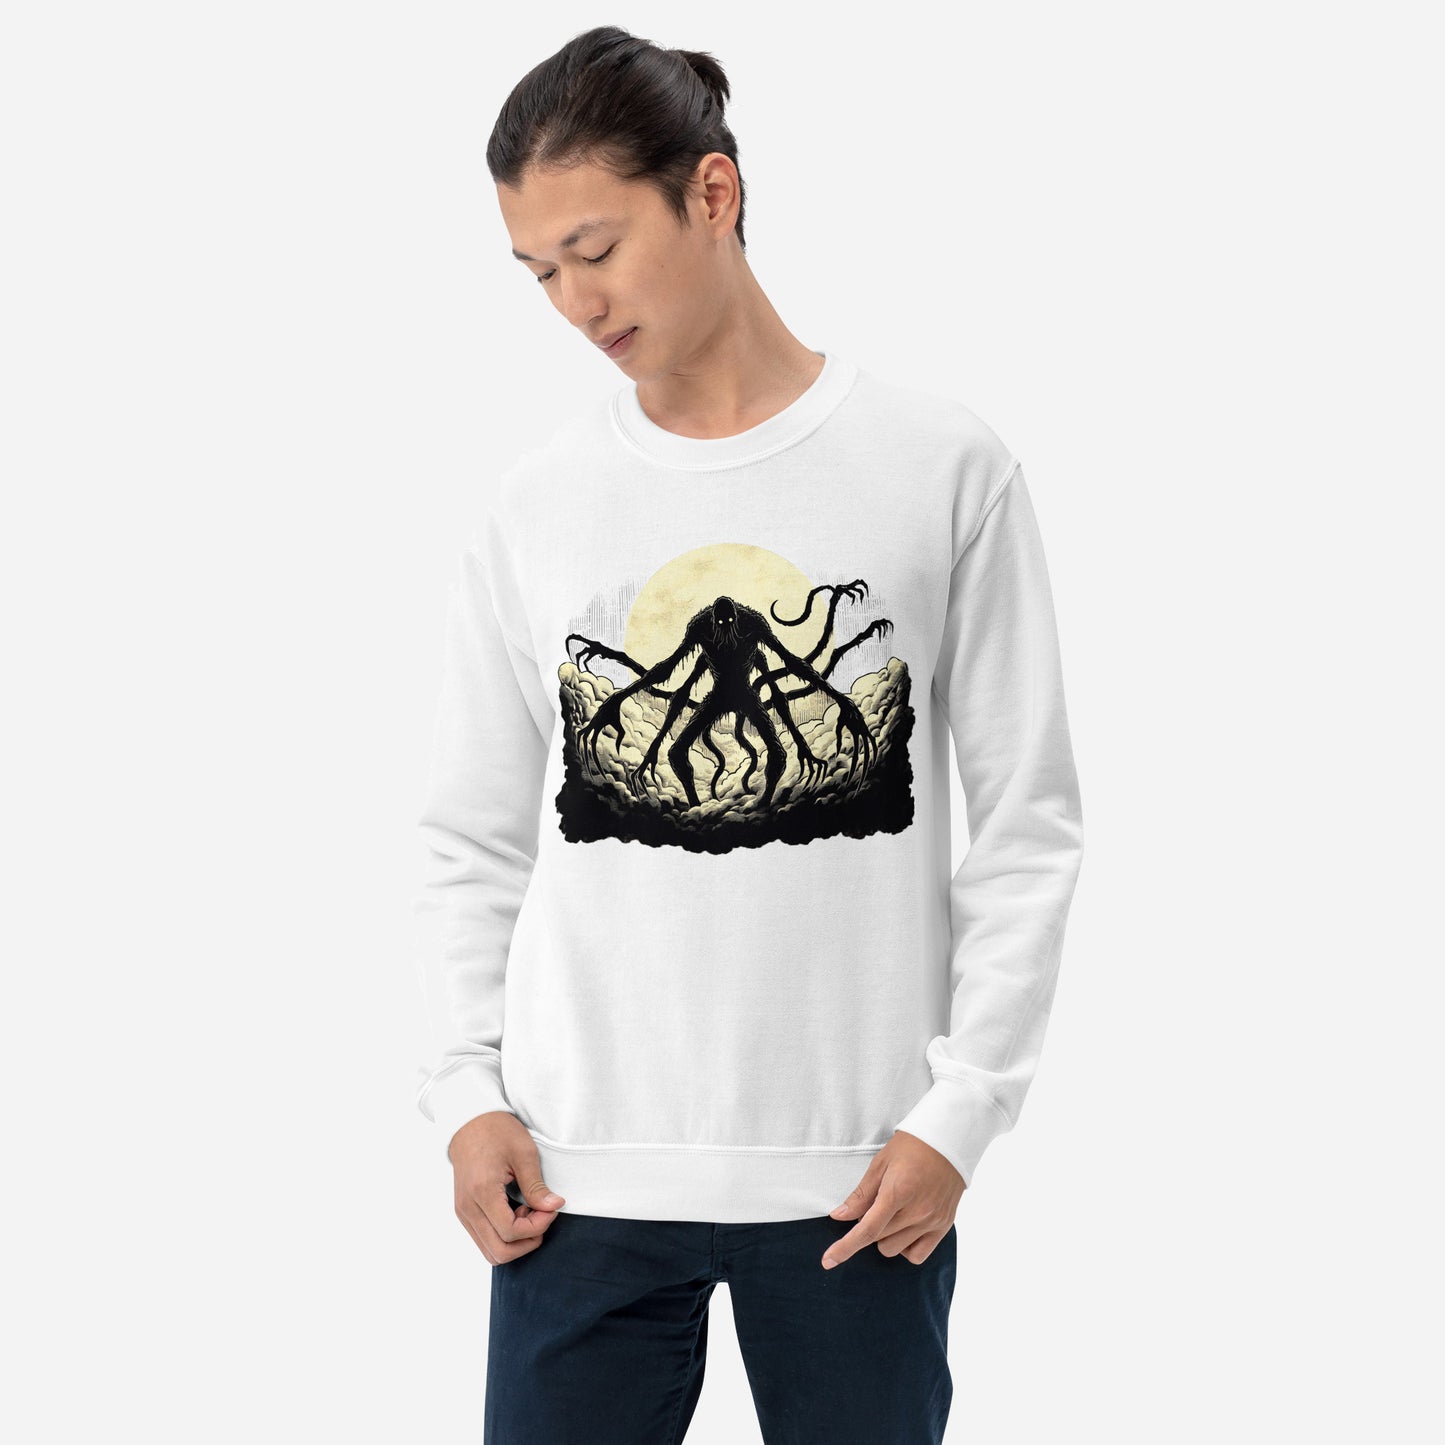 "corvillus" unisex sweatshirt